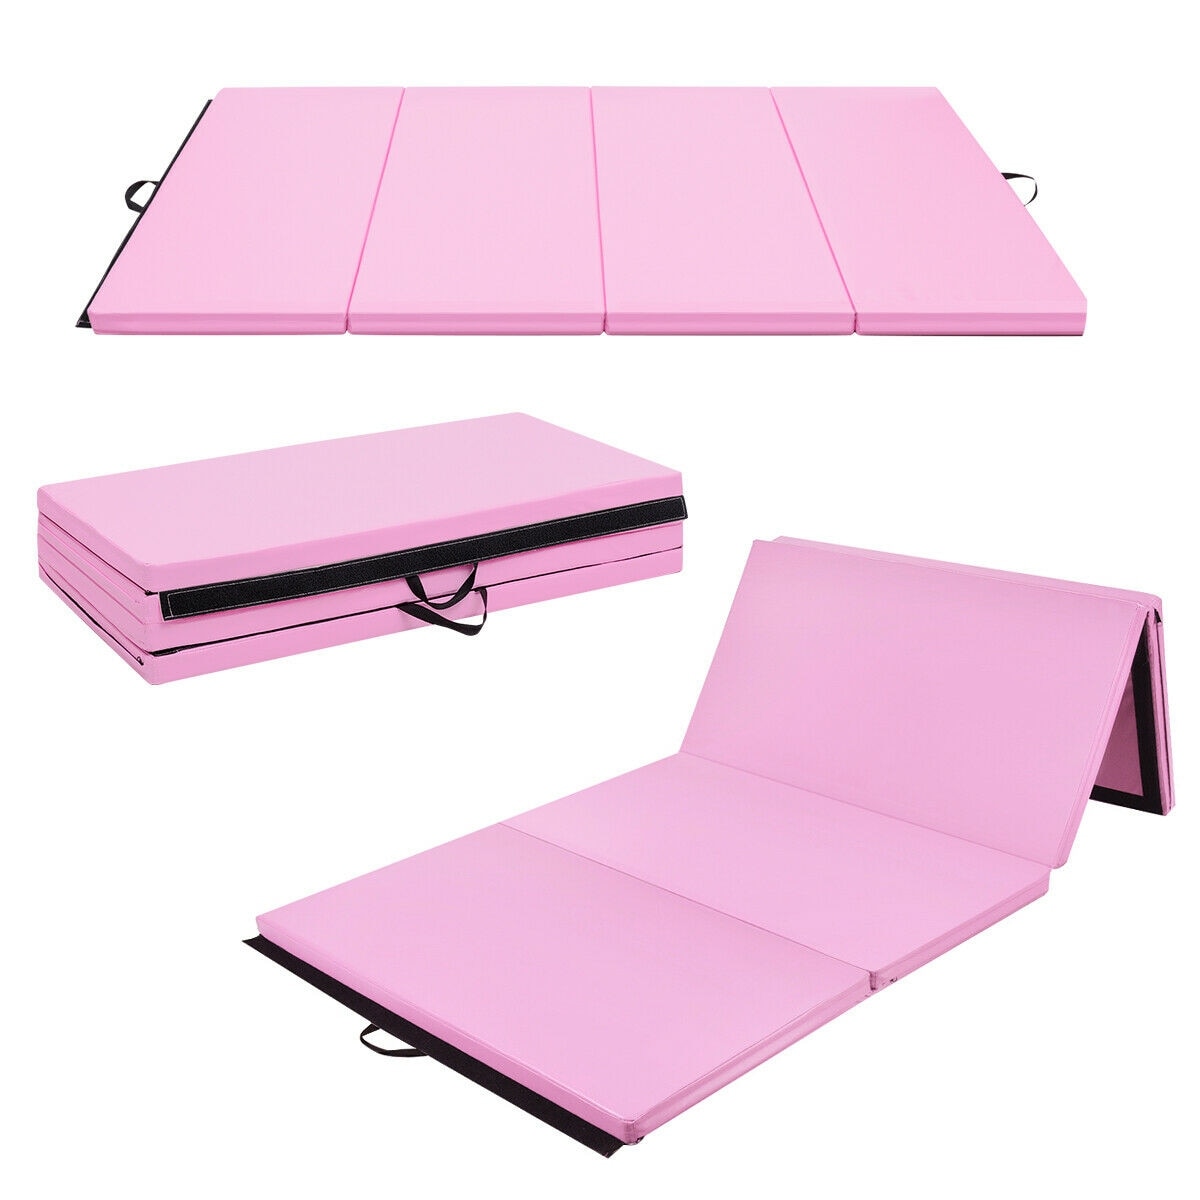 4 x 10 Feet Thick Folding Panel Gymnastics Mat - Costway